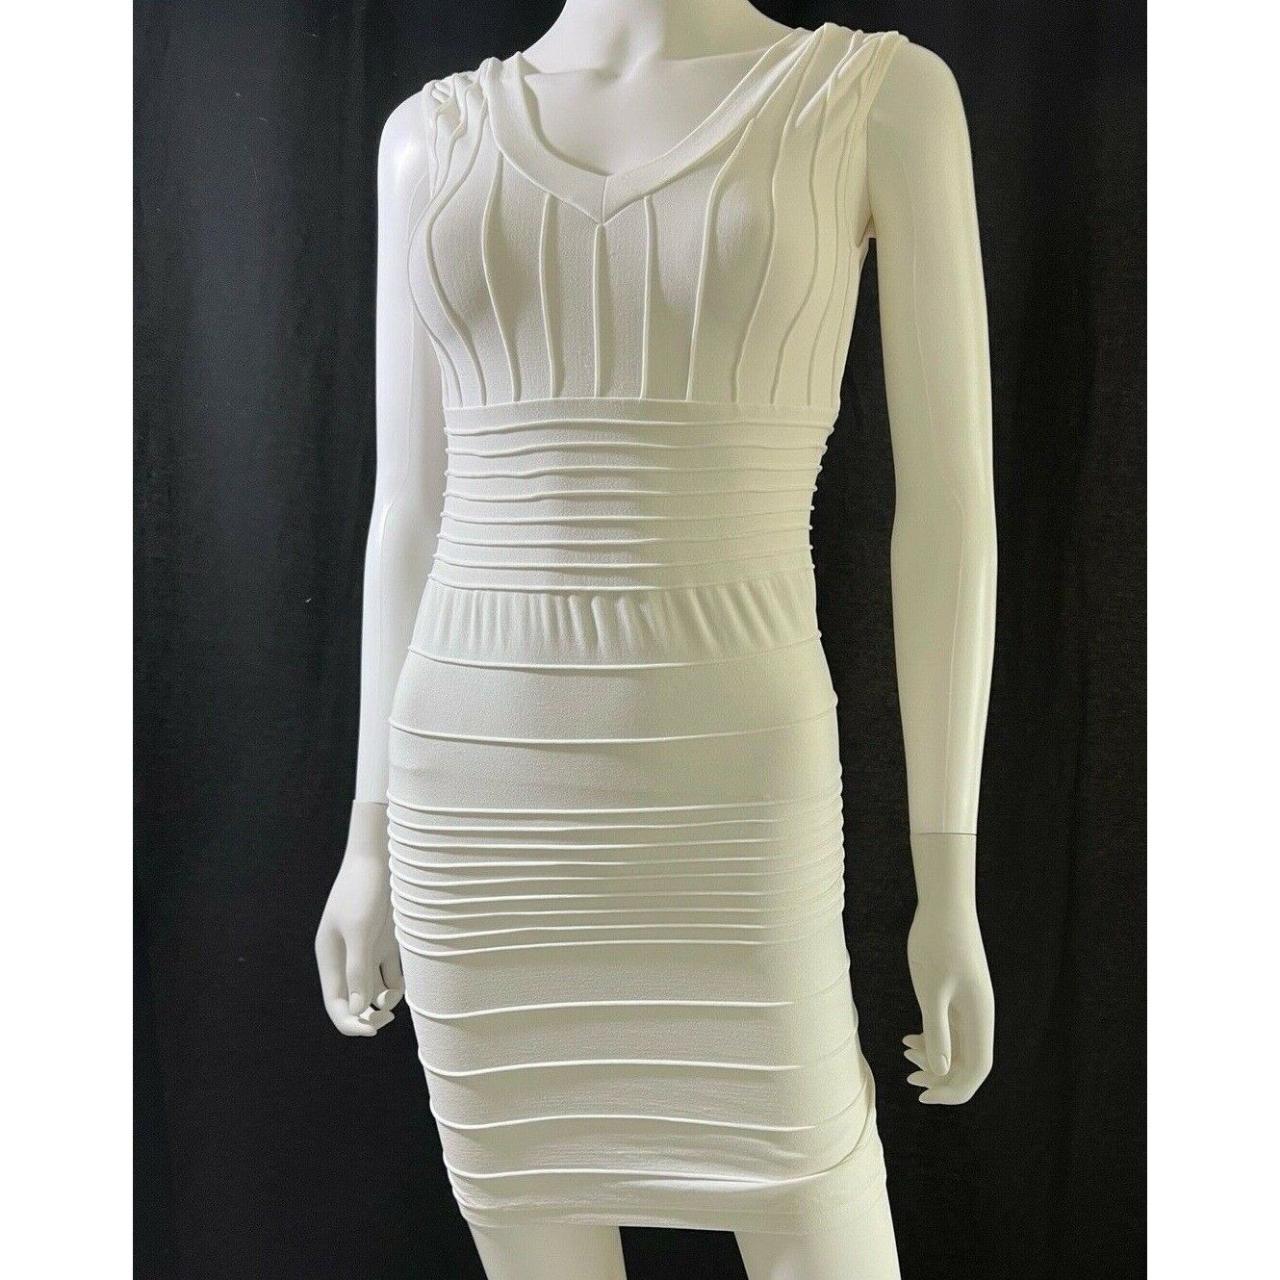 Colorful Standard Women's White Dress